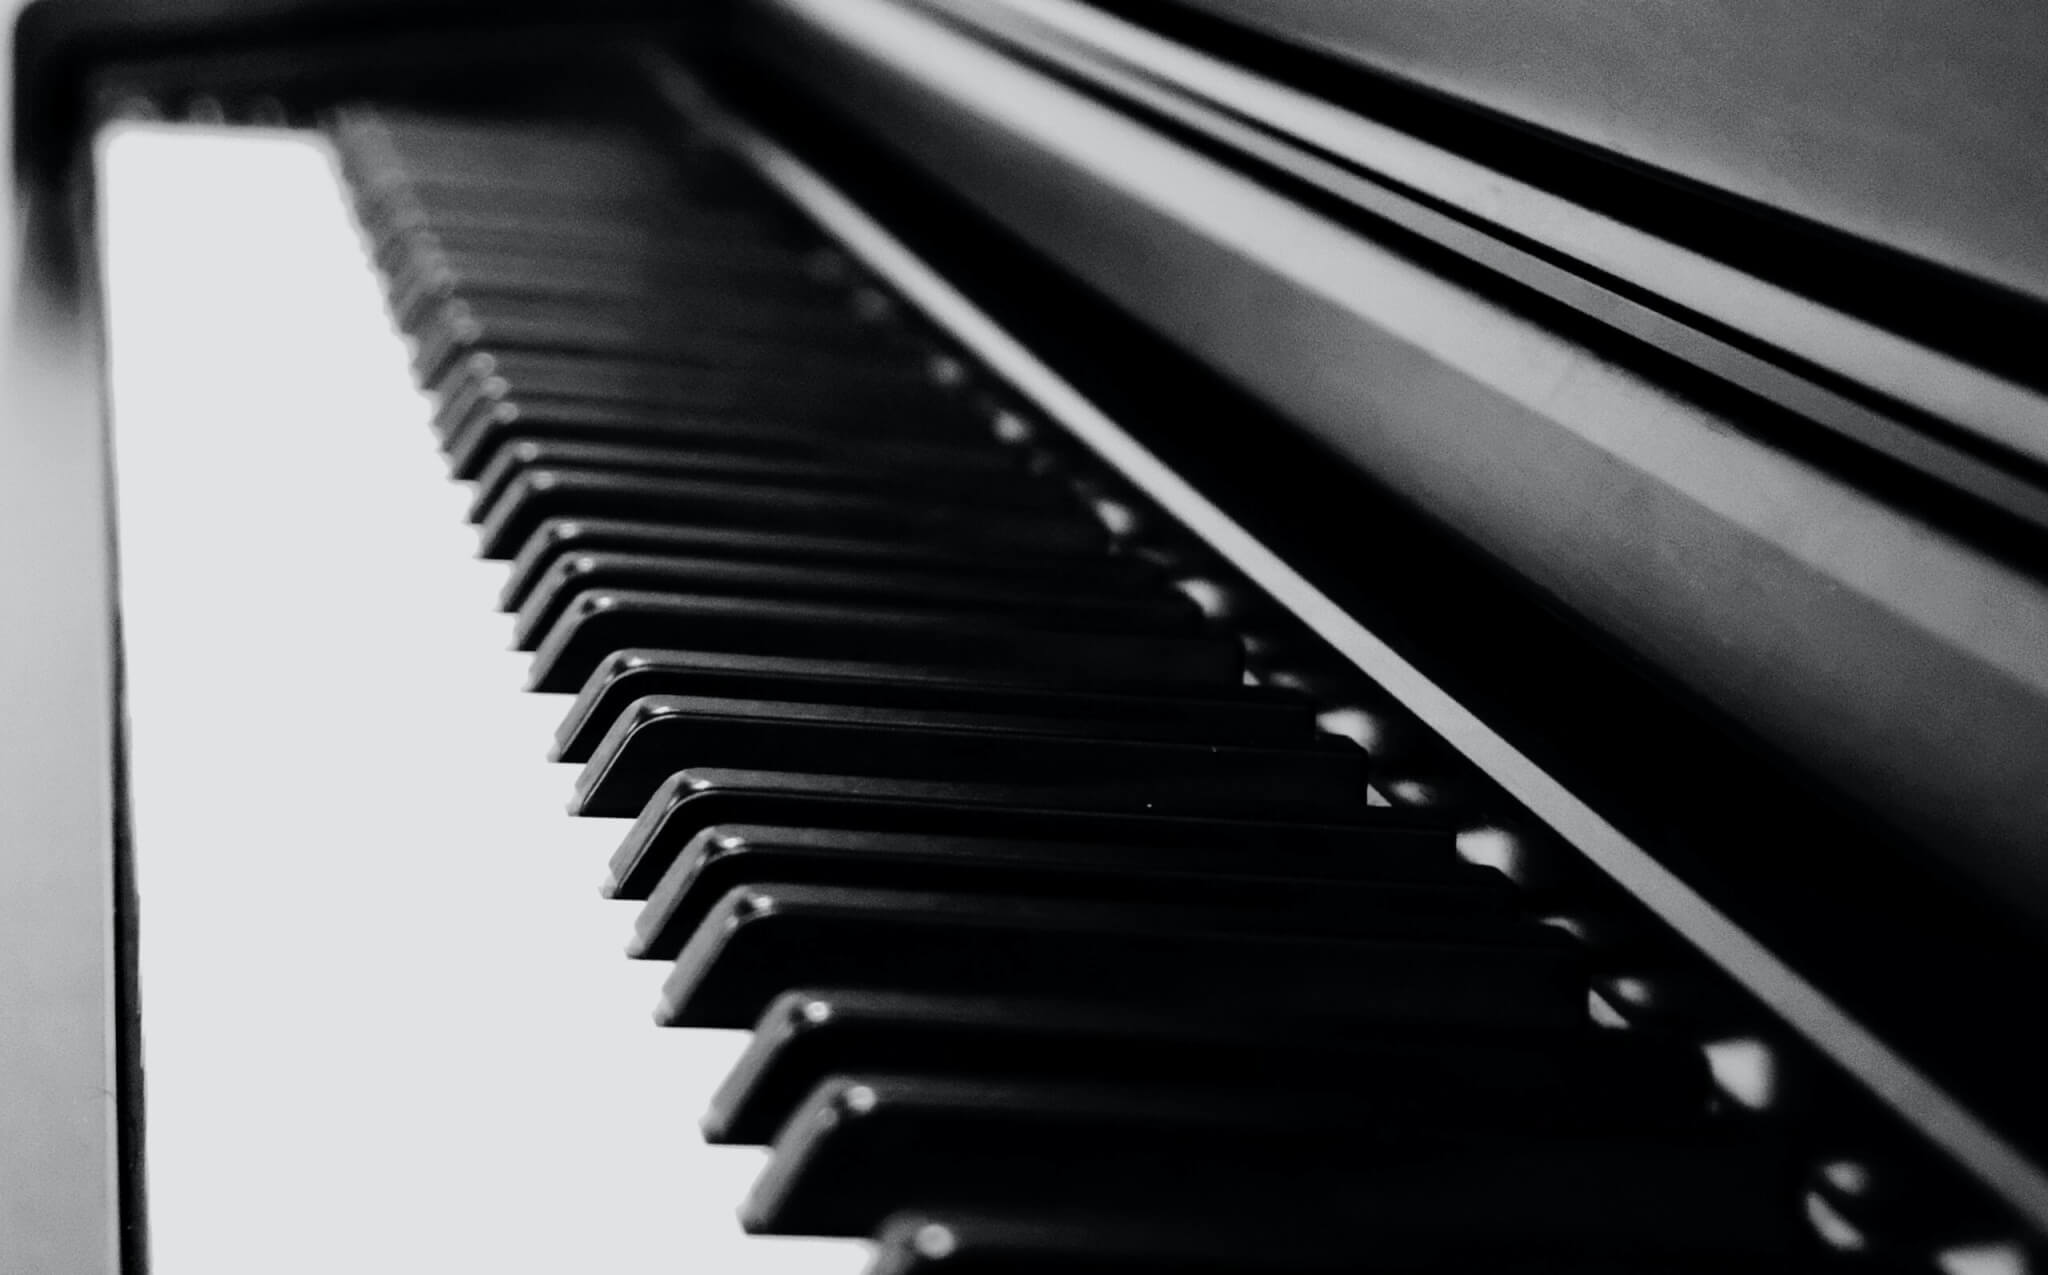 Yamaha digital piano keys (Photo by Siamak on Unsplash)